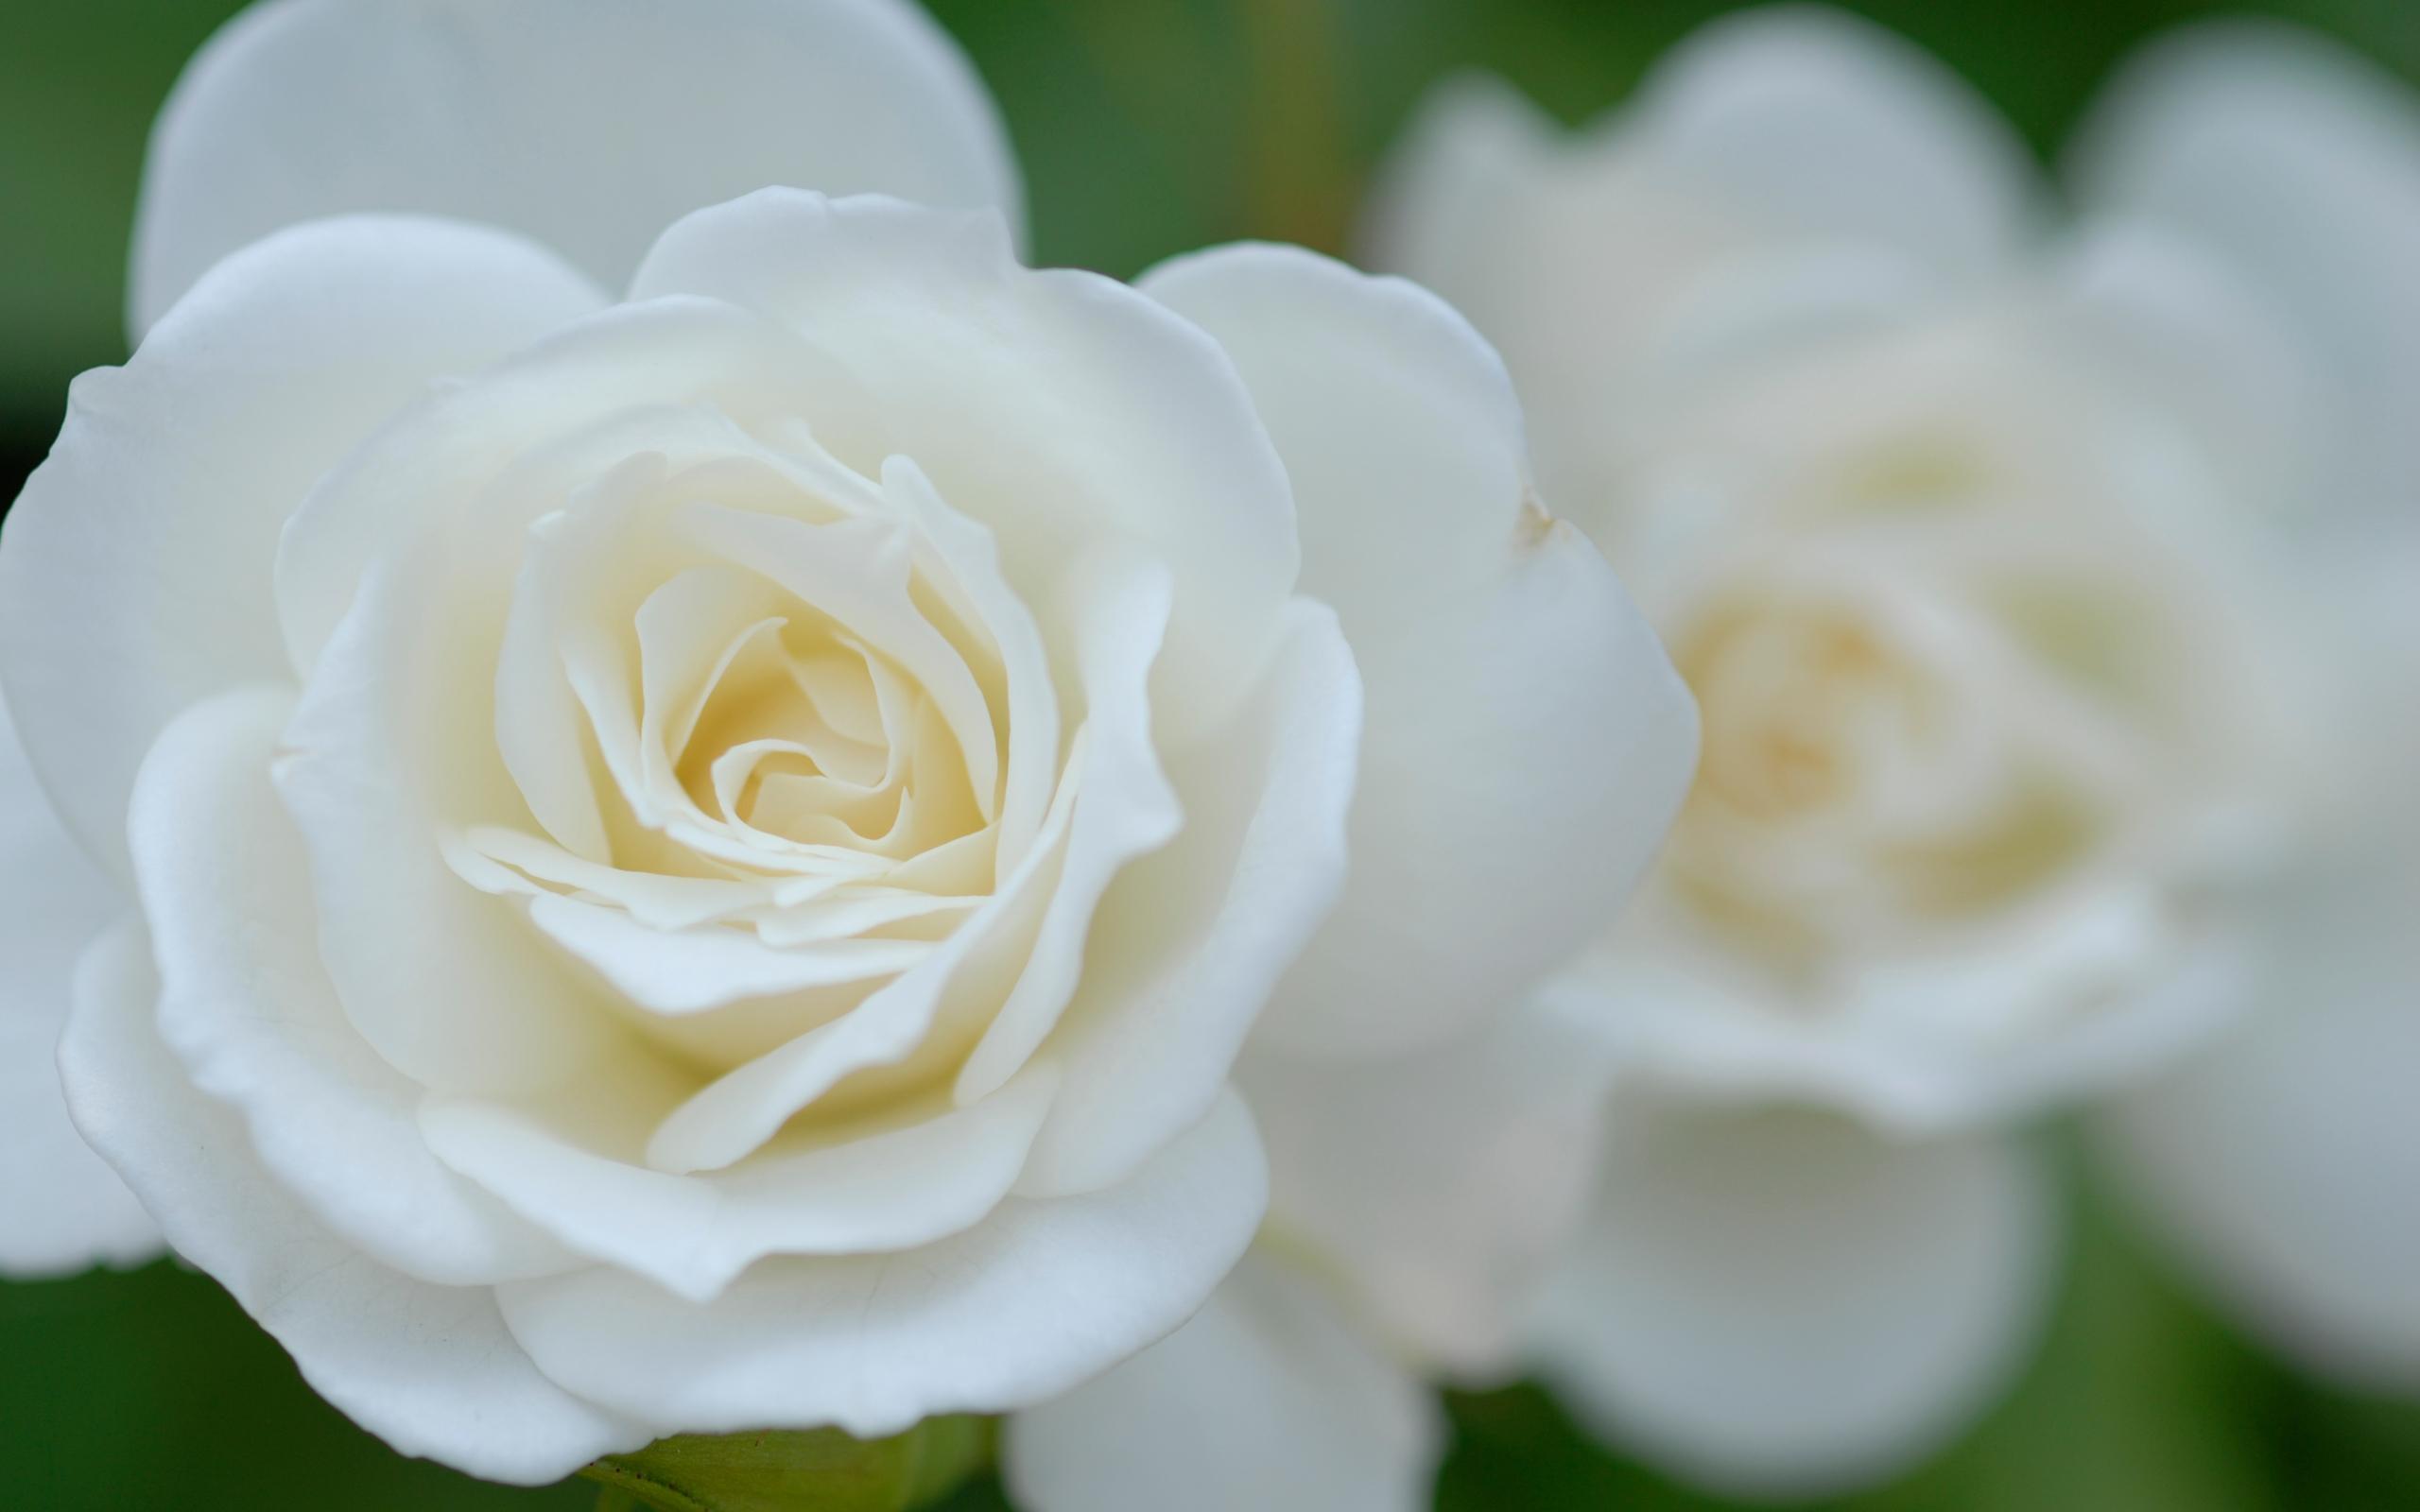 Inspirational White Rose Flower Image